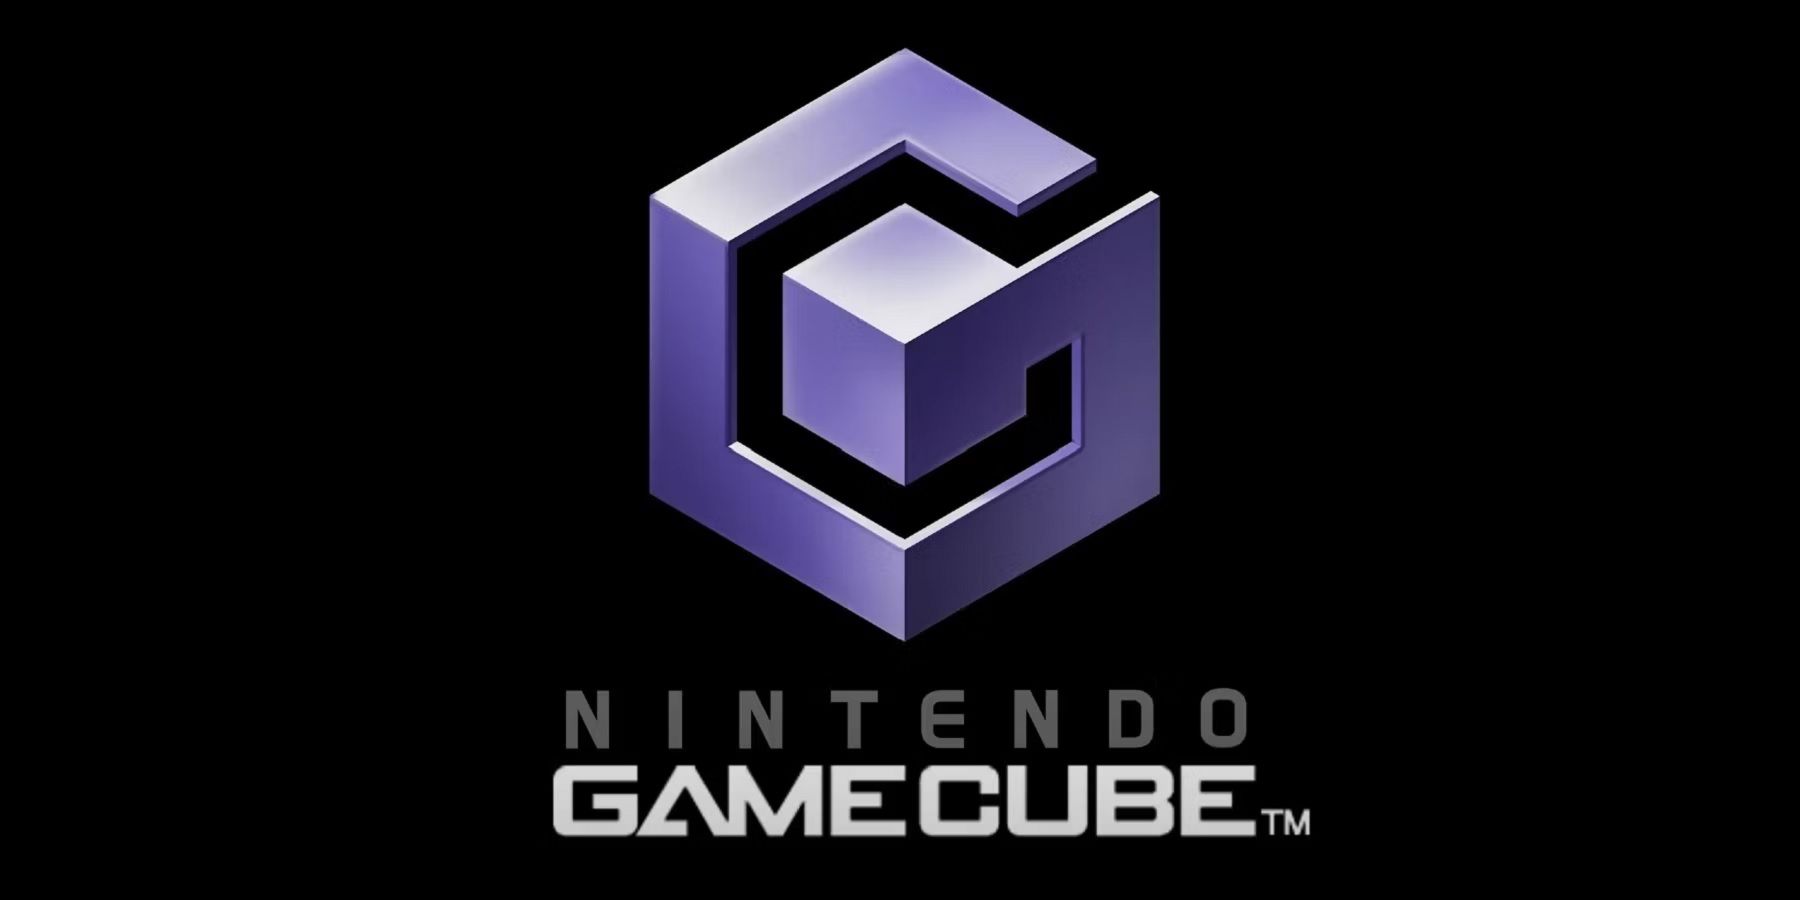 Metroid Prime / The Legend of Zelda Wind Waker Combo! Nintendo GameCube  RARE!!